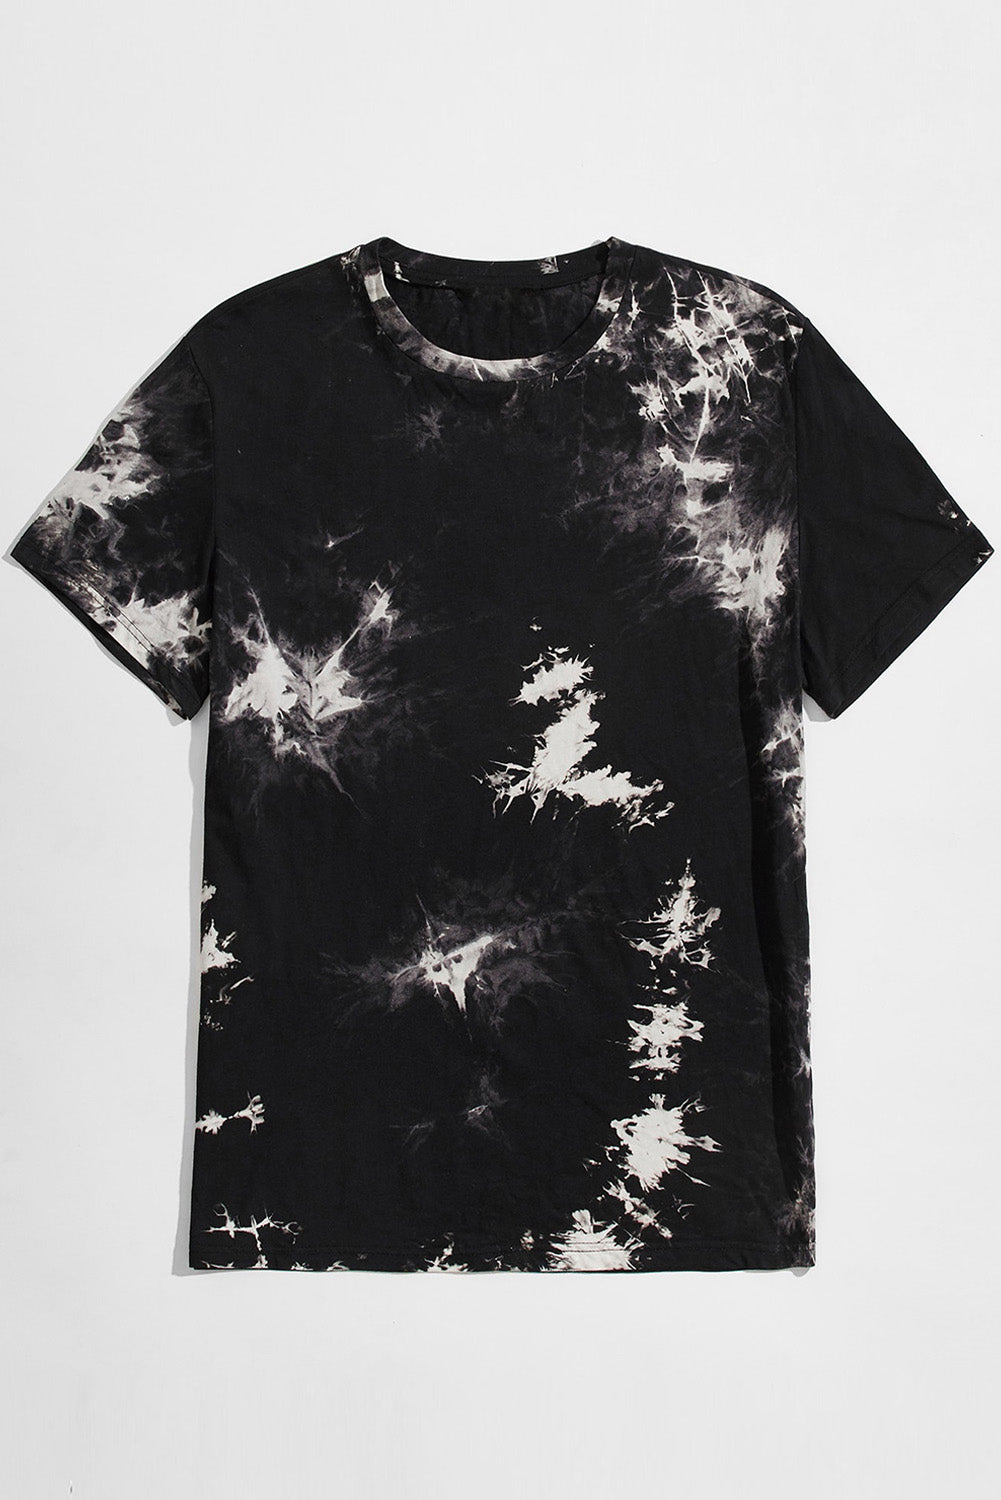 Black Men's Cross Tie Dyed Print Short Sleeve Men's T-shirt Men's Tops JT's Designer Fashion